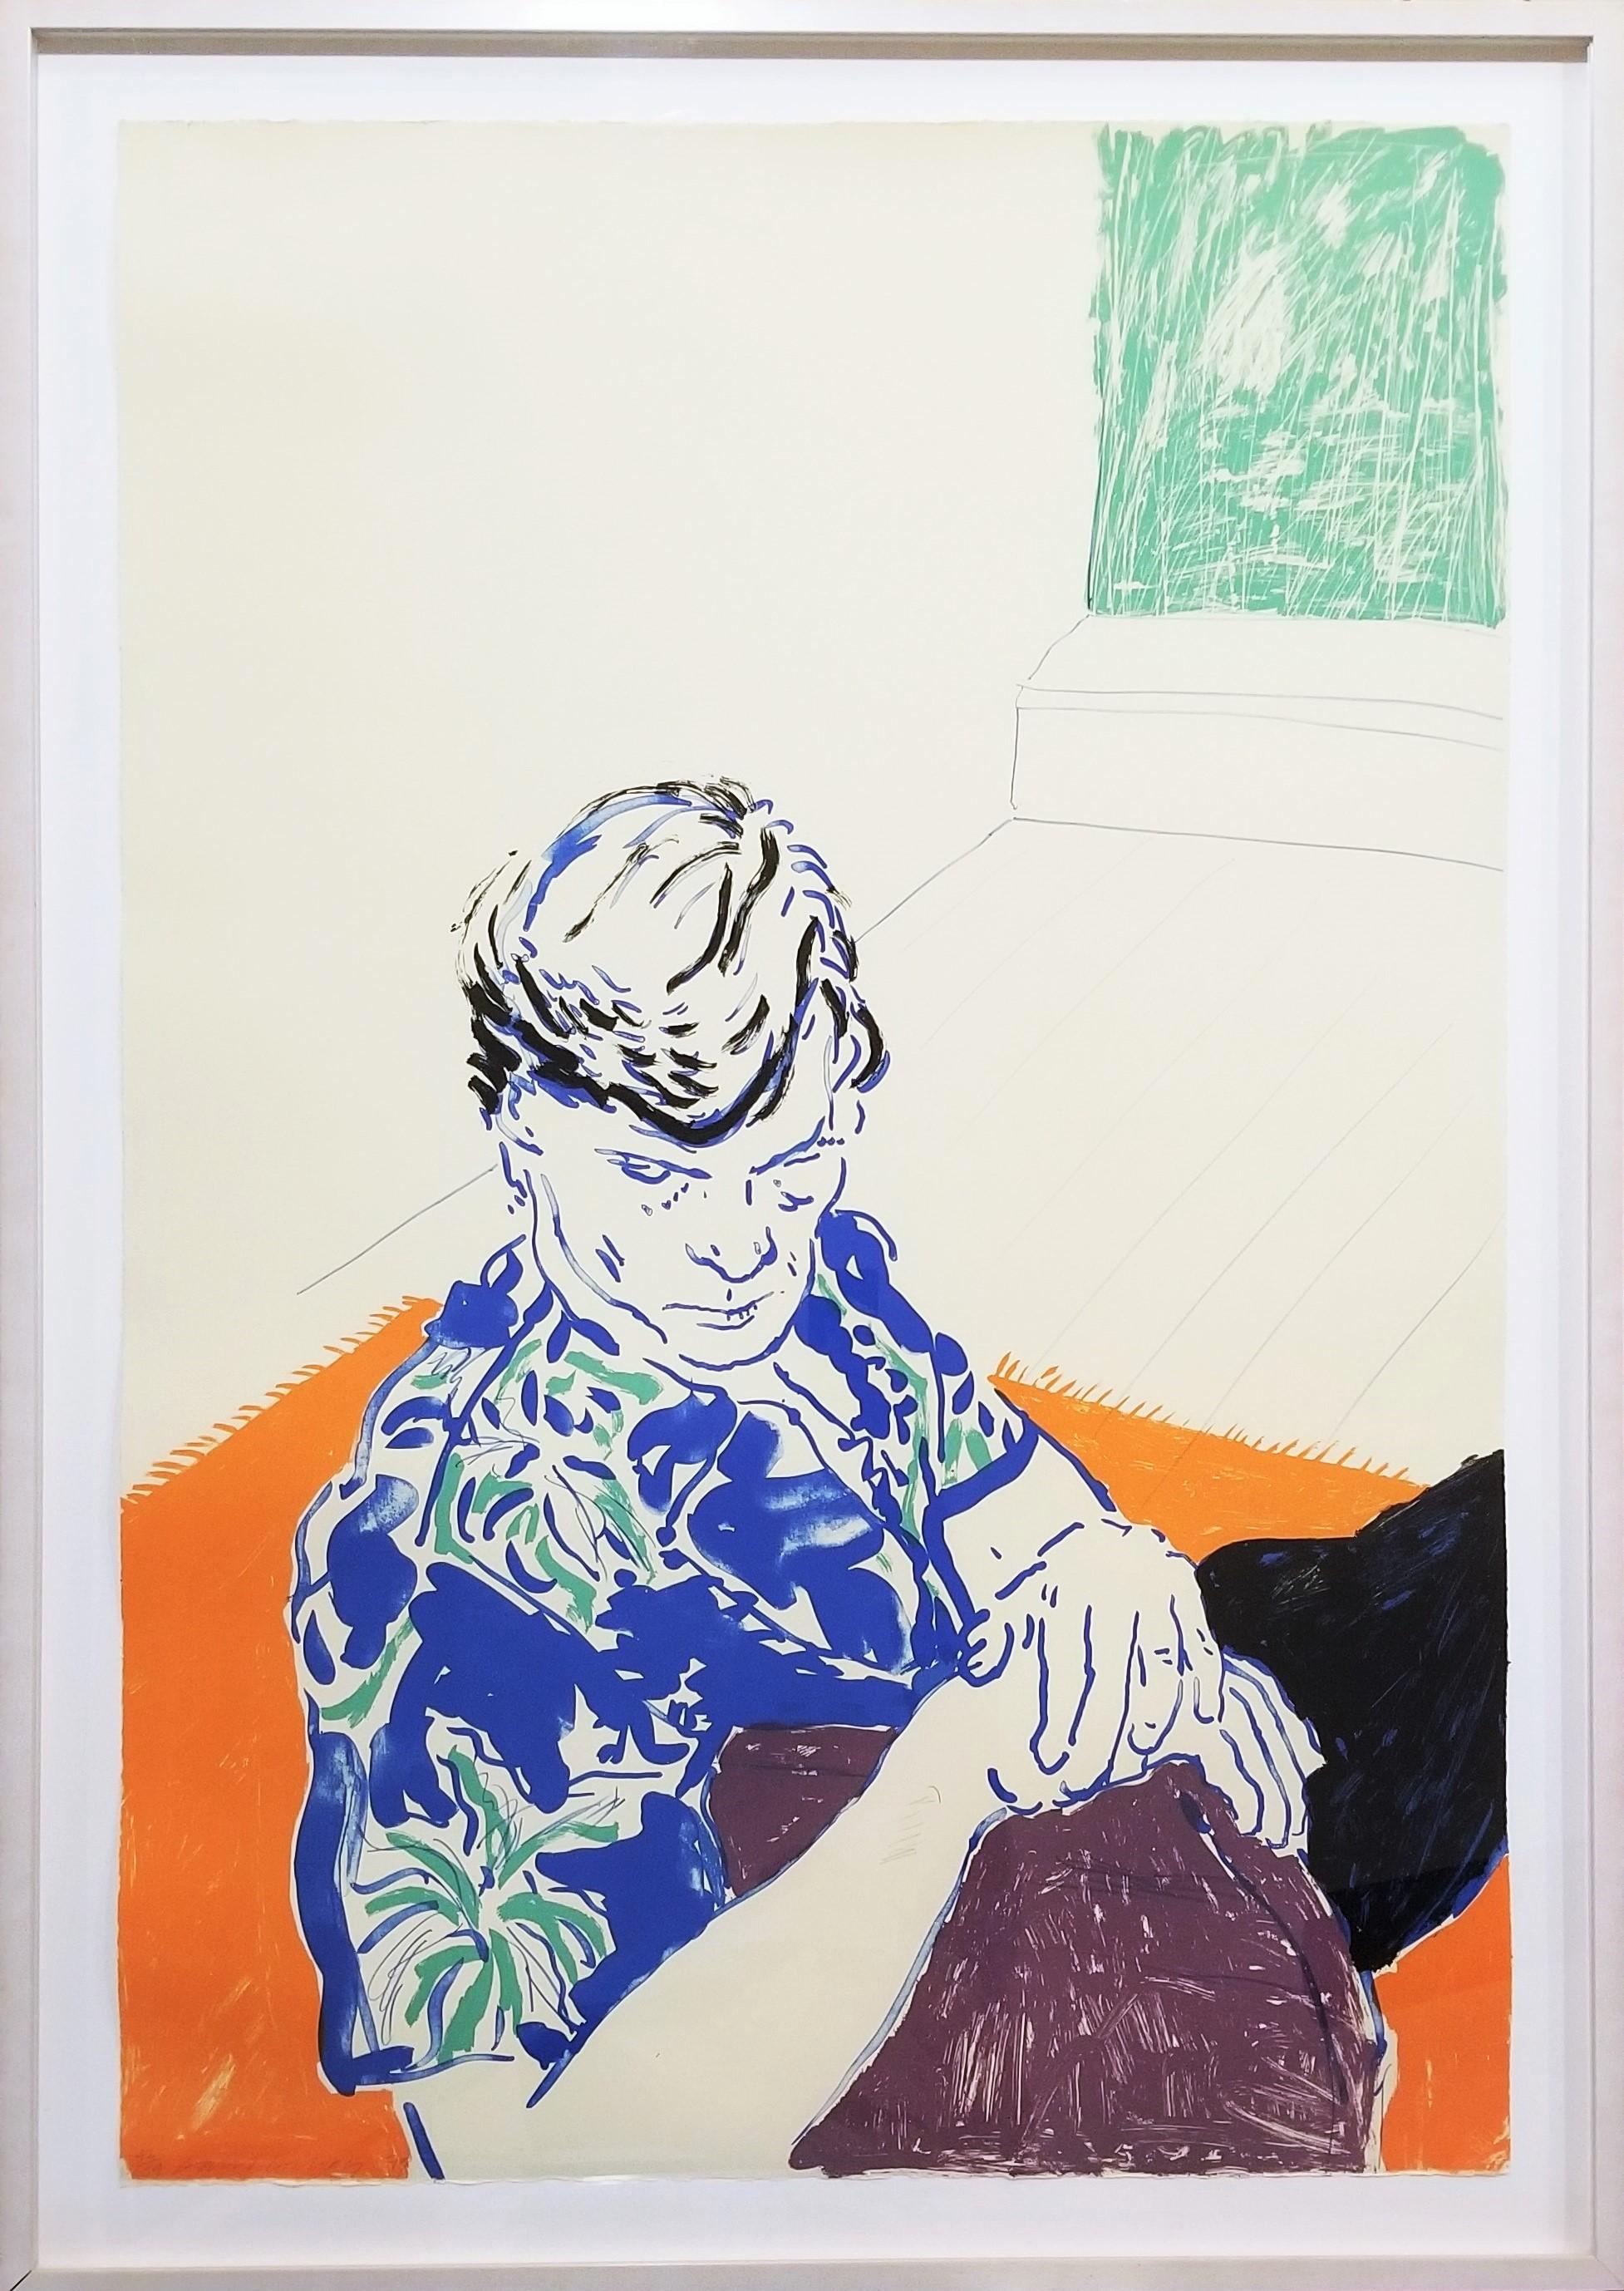 Joe with Green Window - Print by David Hockney